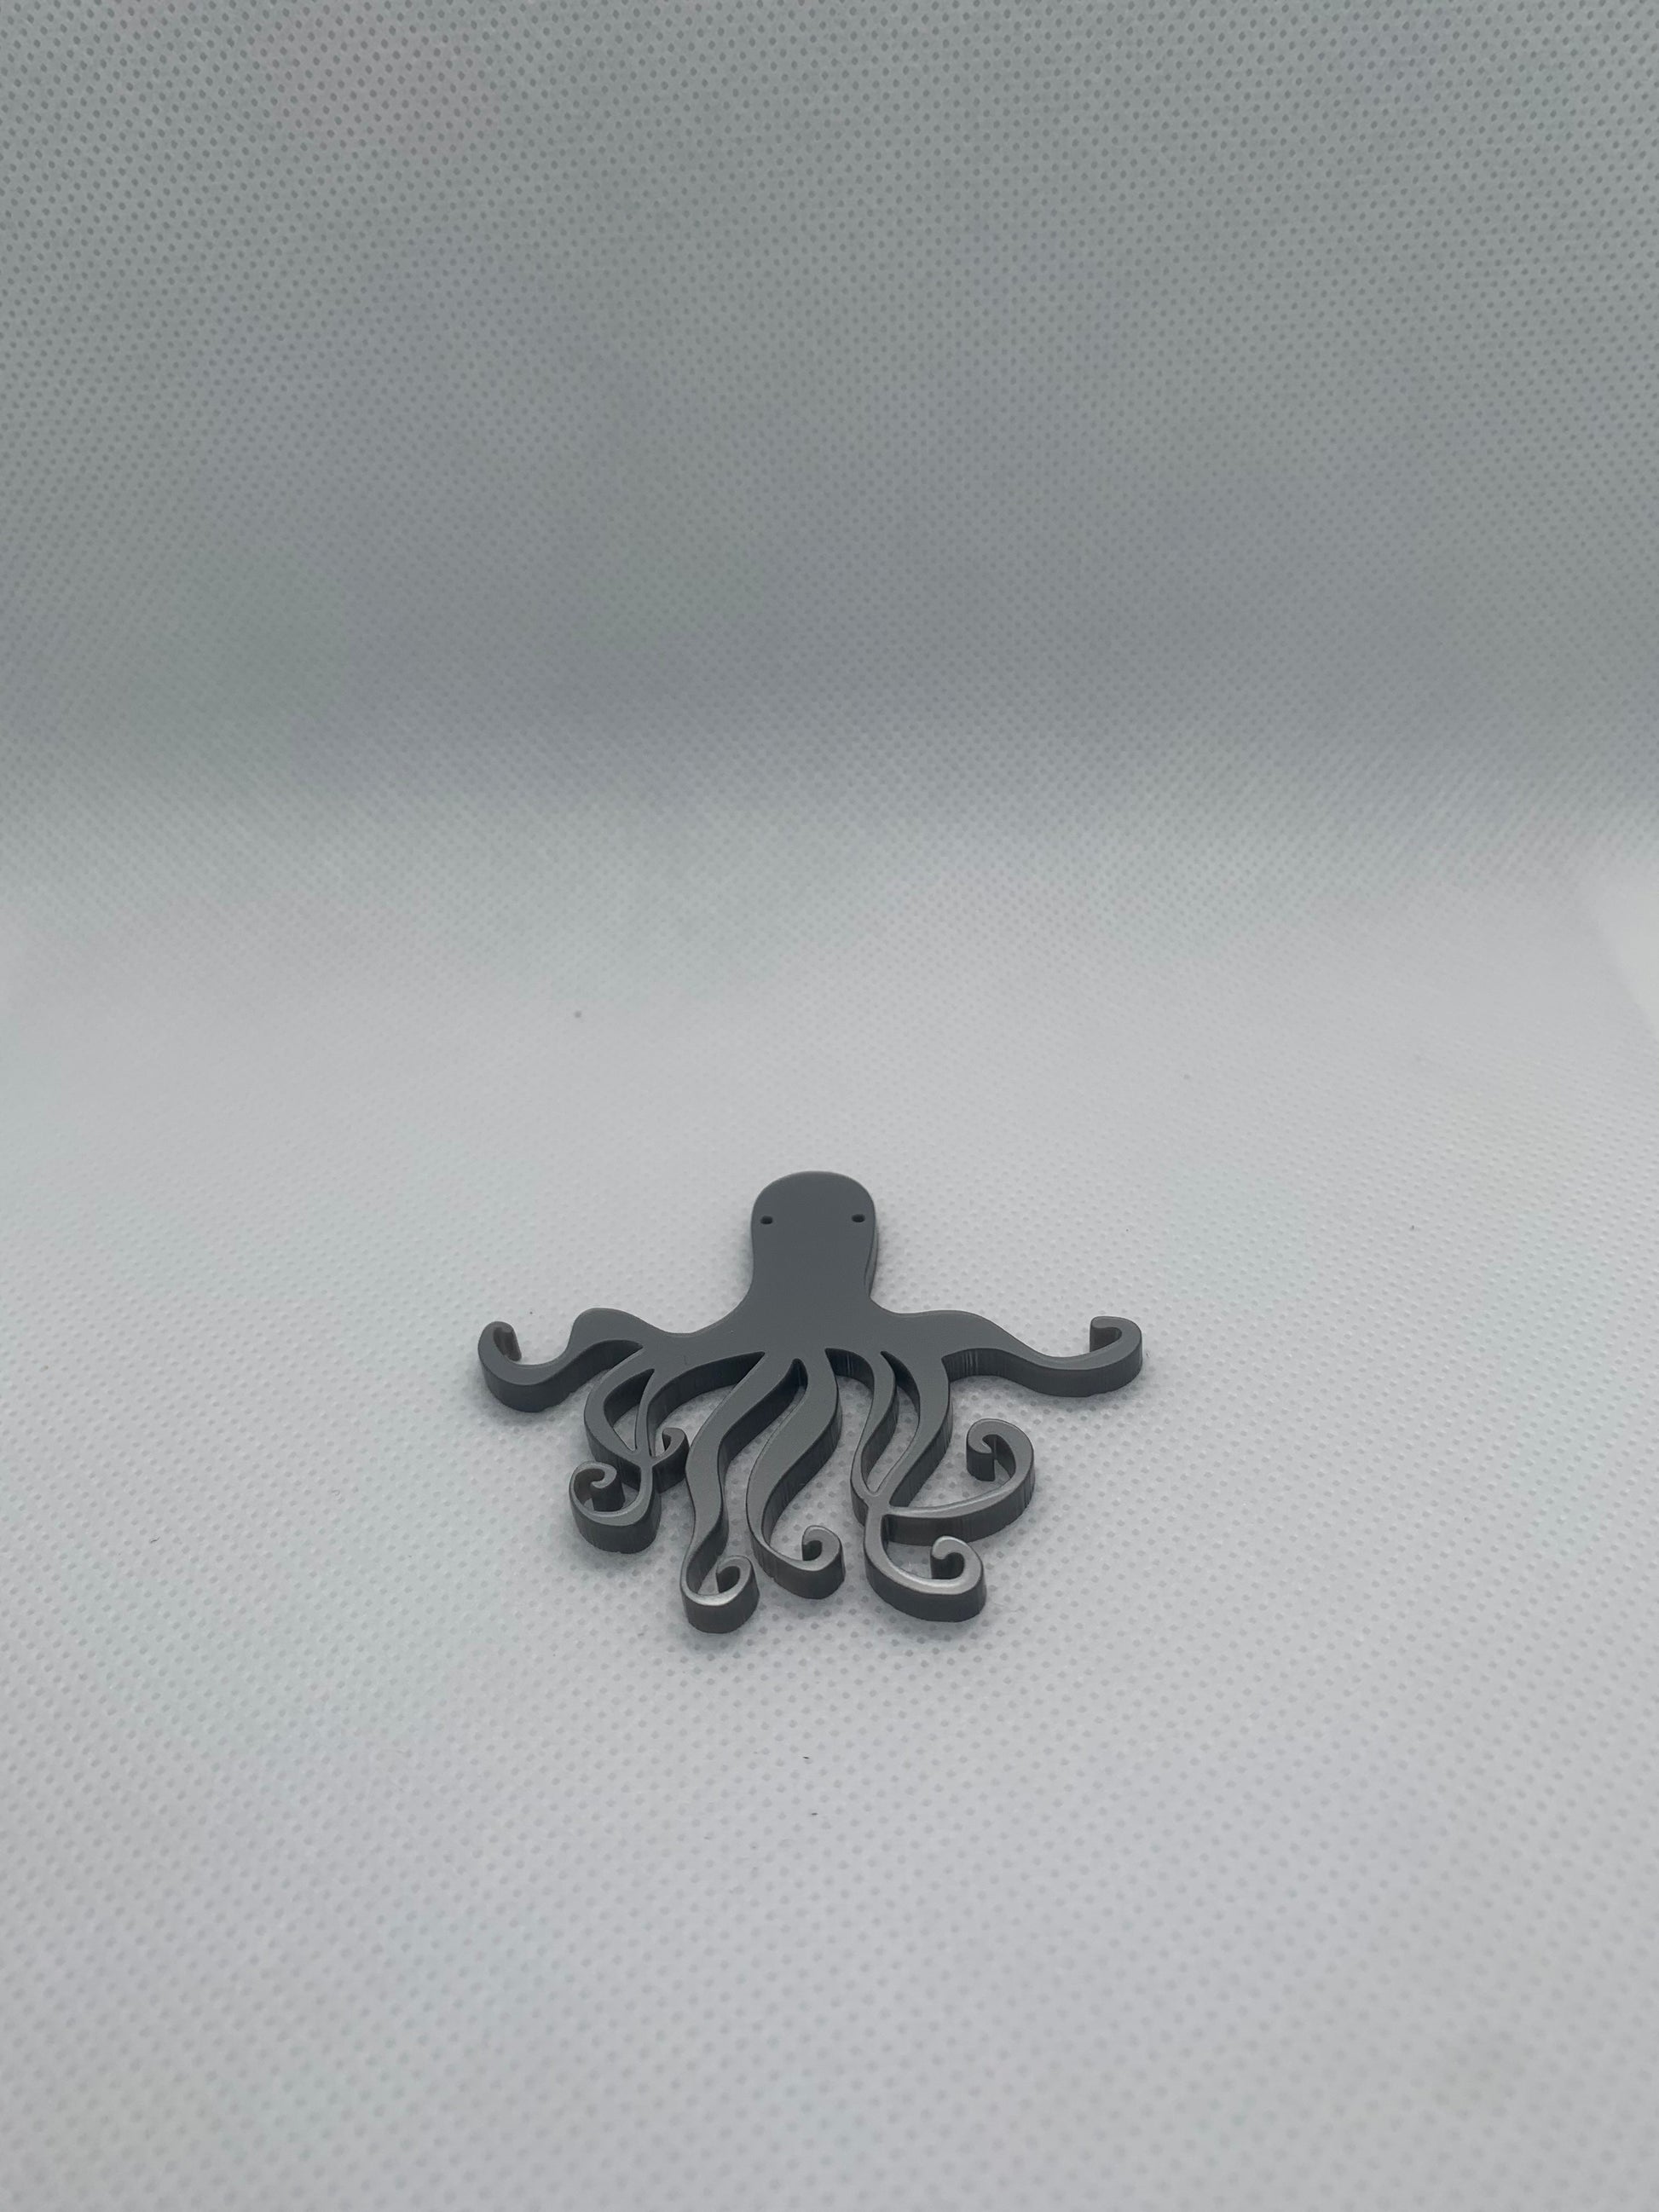 Octopus - Creative Designs By Kari